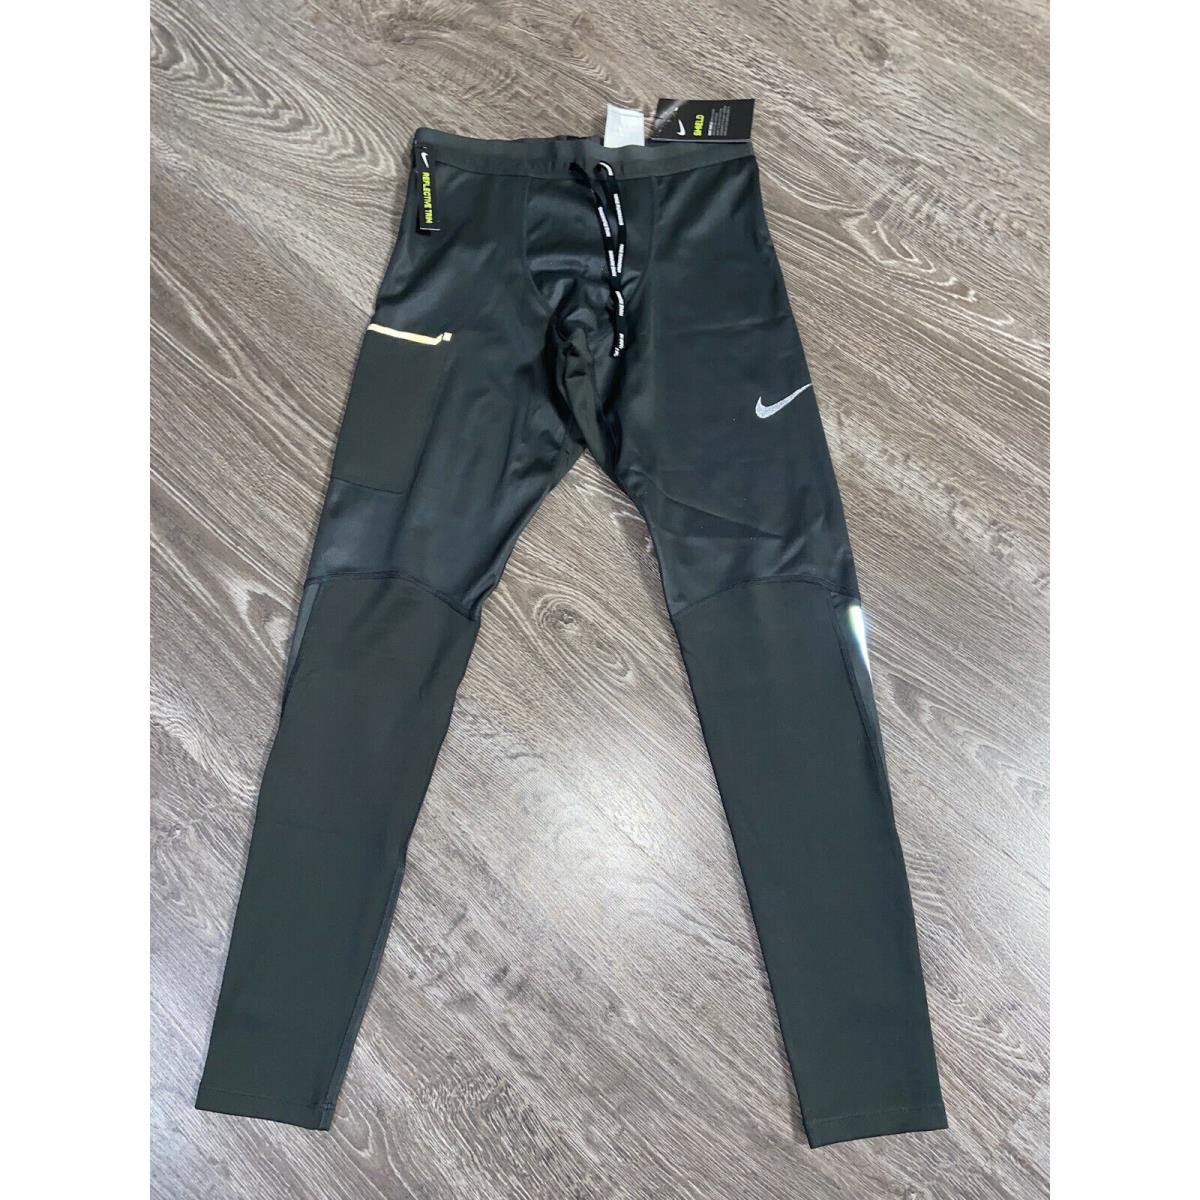 Nike Shield Men Size Small Running Training Tights Pants Charcoal BV5488-084